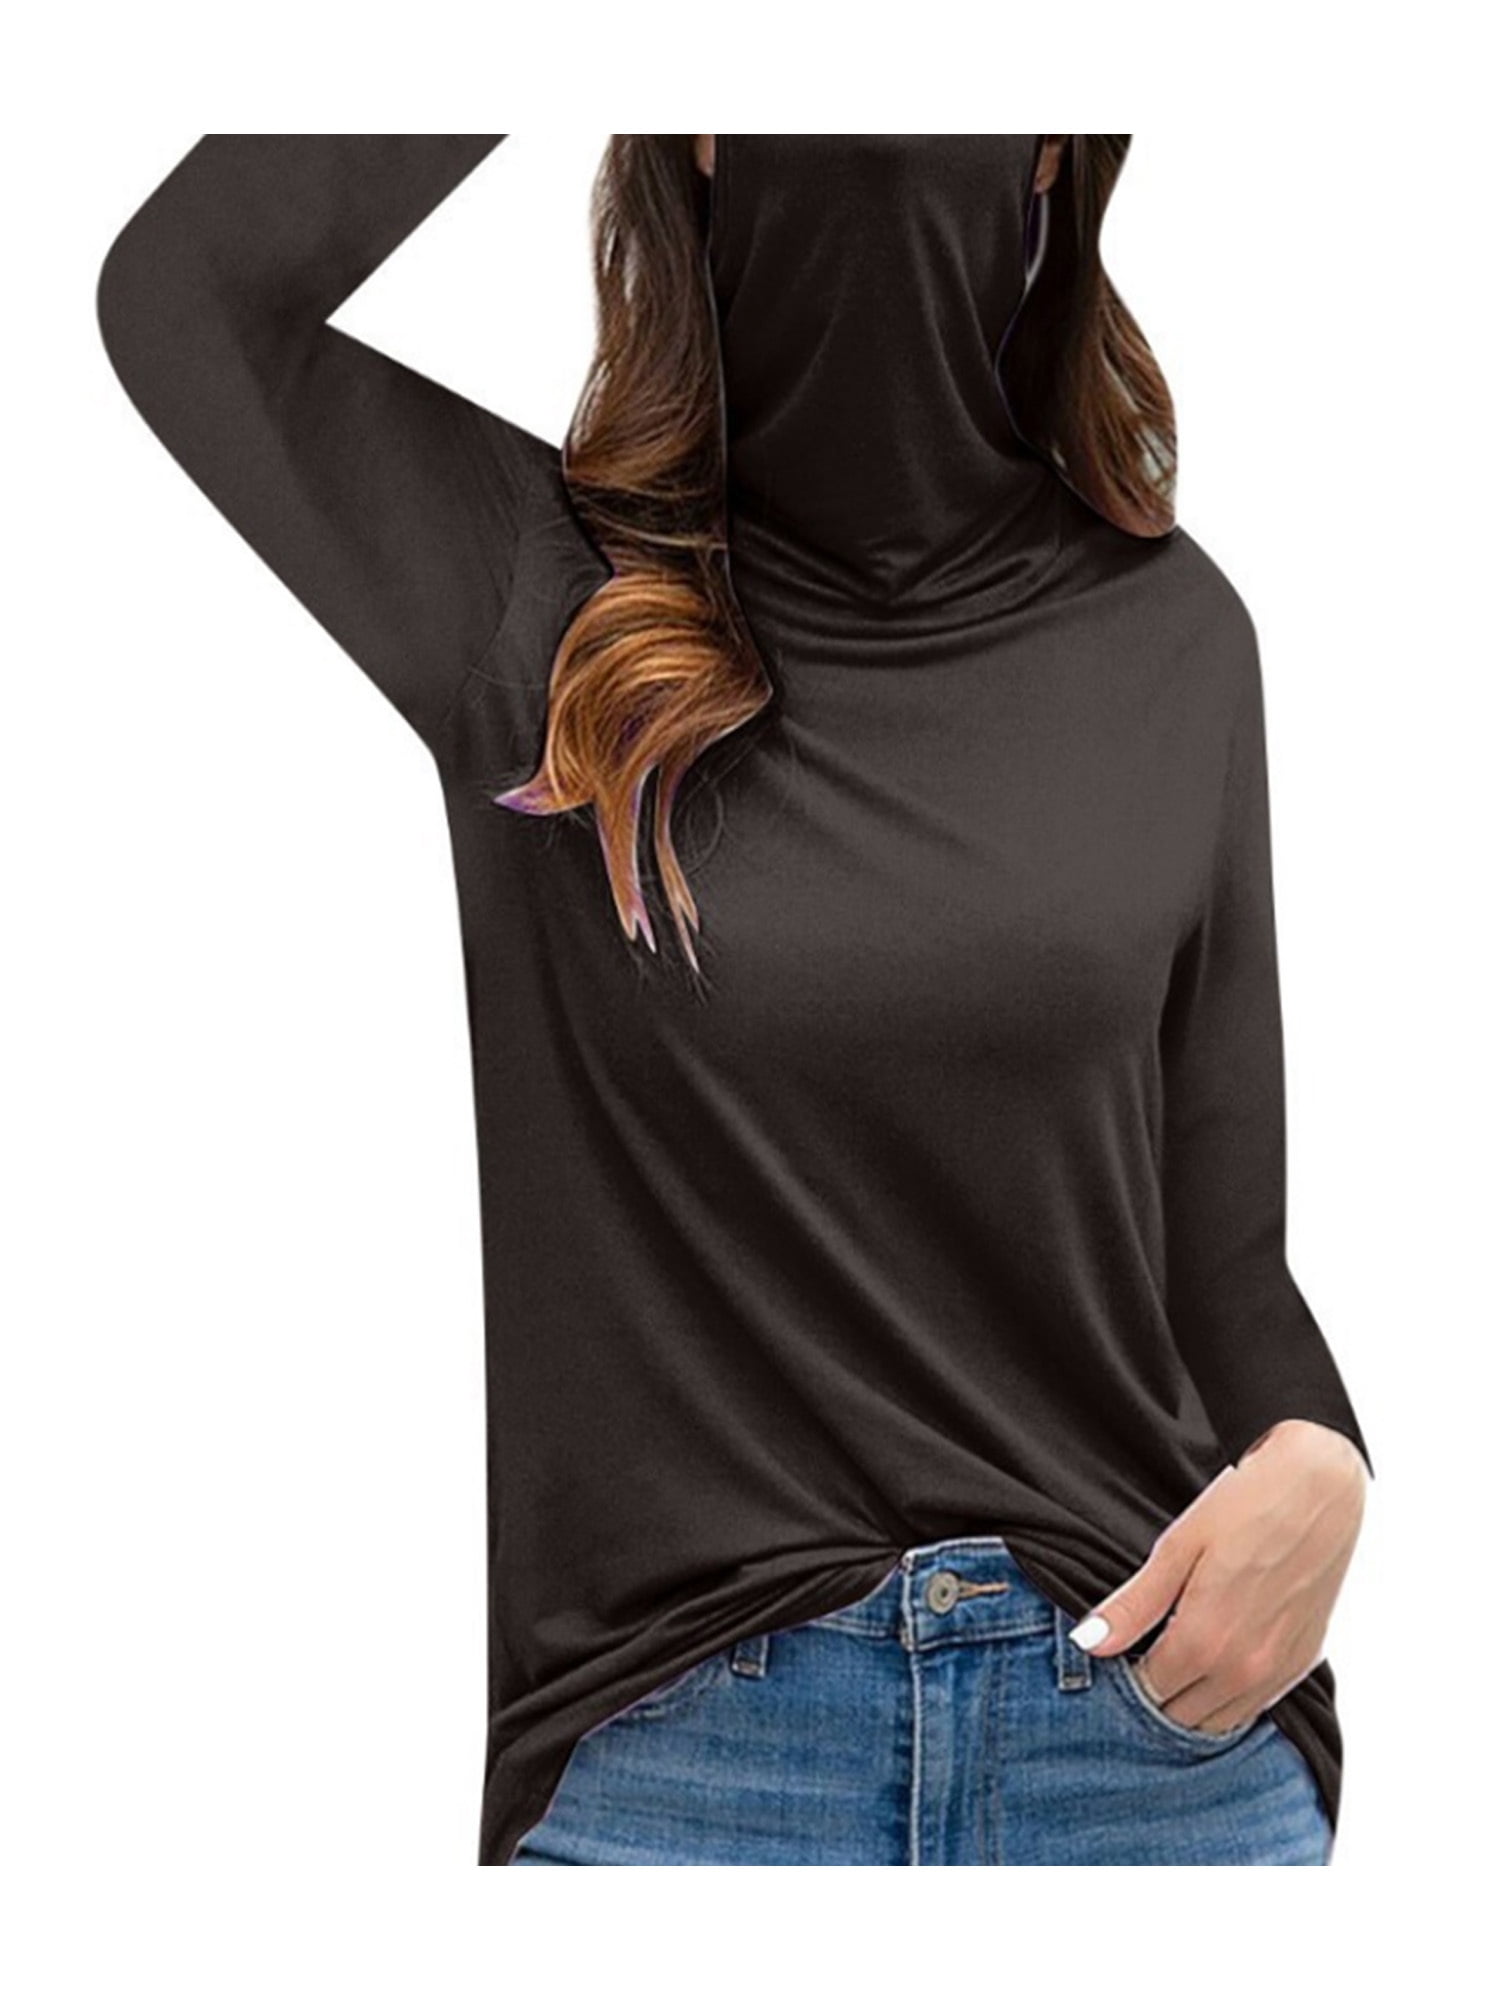 Women's Casual Loose Turtleneck Long Sleeve Soild Face Cover Tops T-shirt Blouse